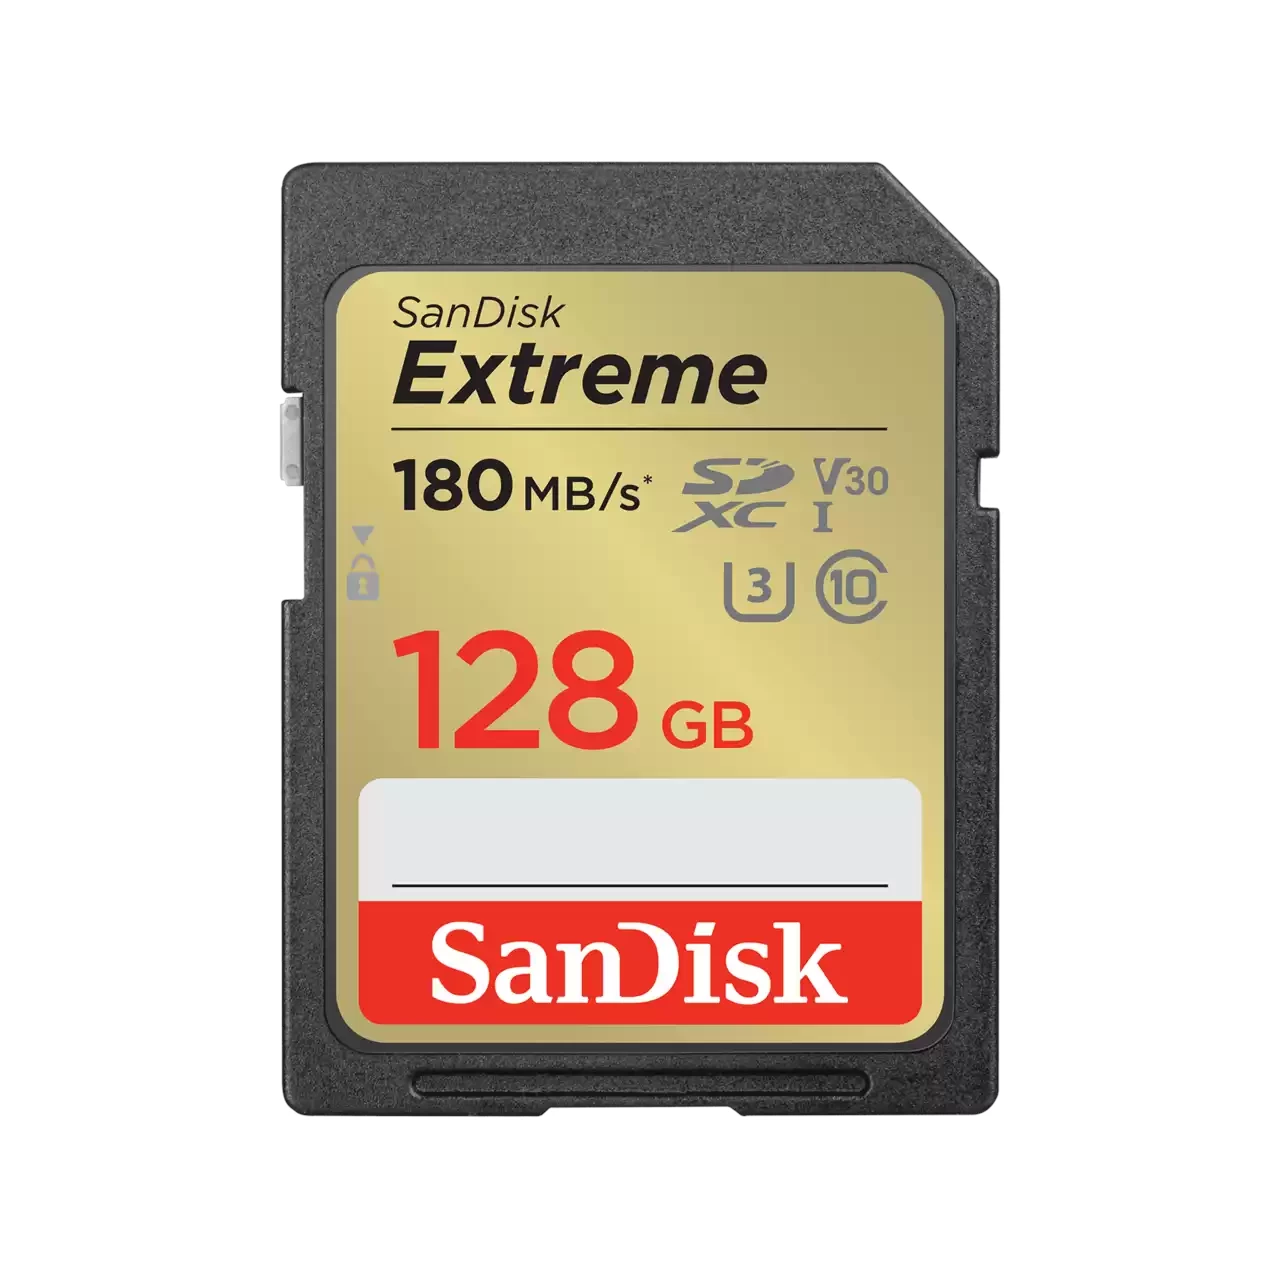 Sandisk Extreme 128Gb SDXC UHS-I Memory Card #SDSDXVA-128G